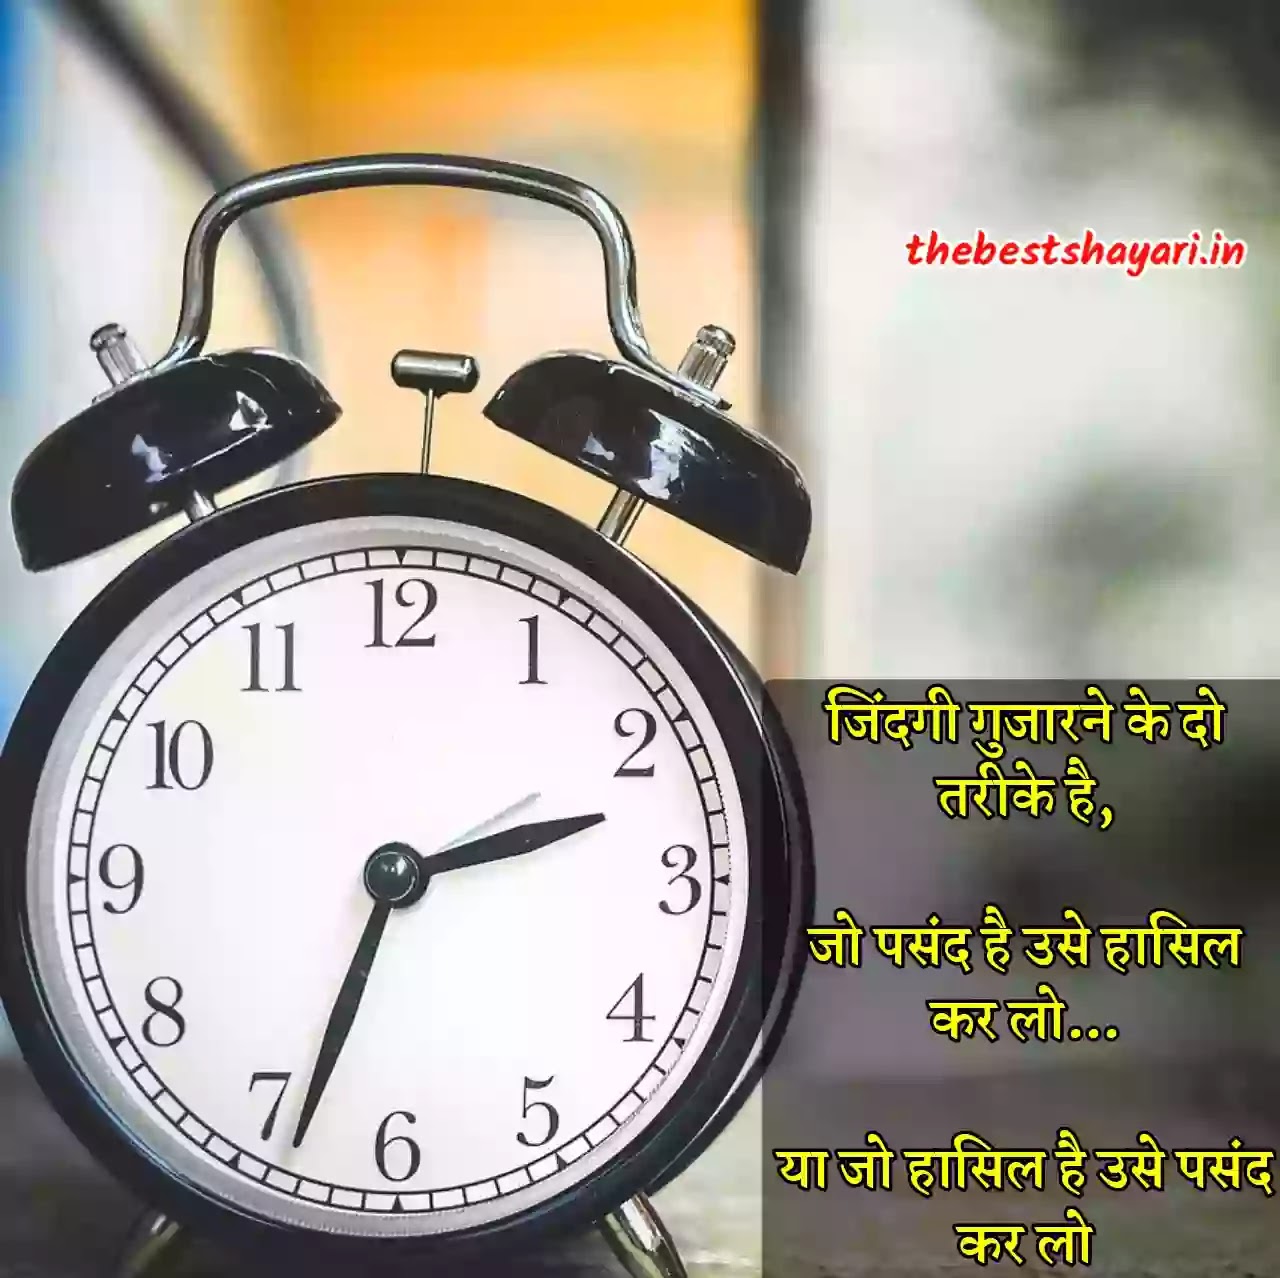 Hindi motivation words